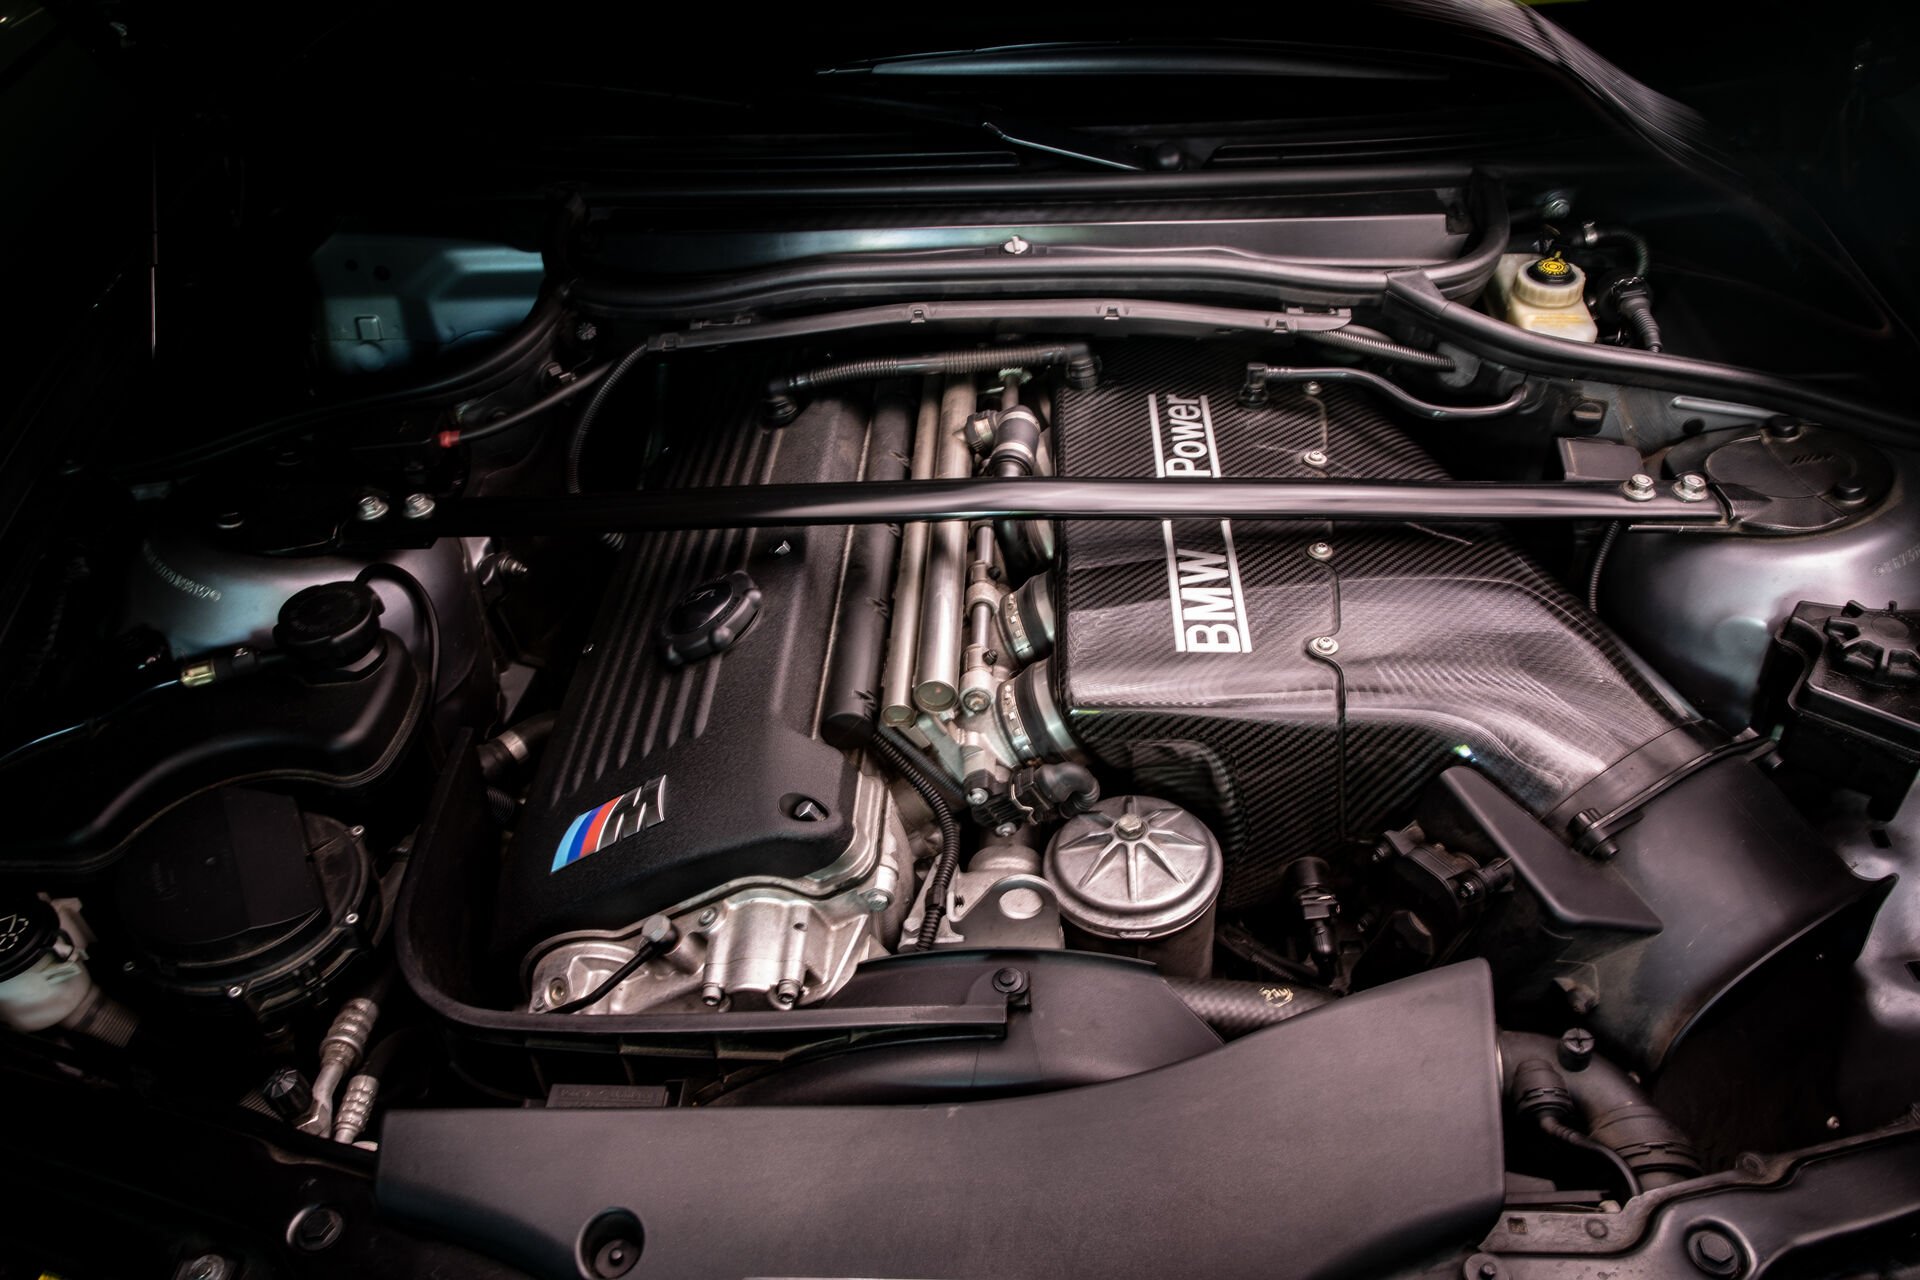 Kaufberatung BMW 3er E46: Der perfekte Dreier